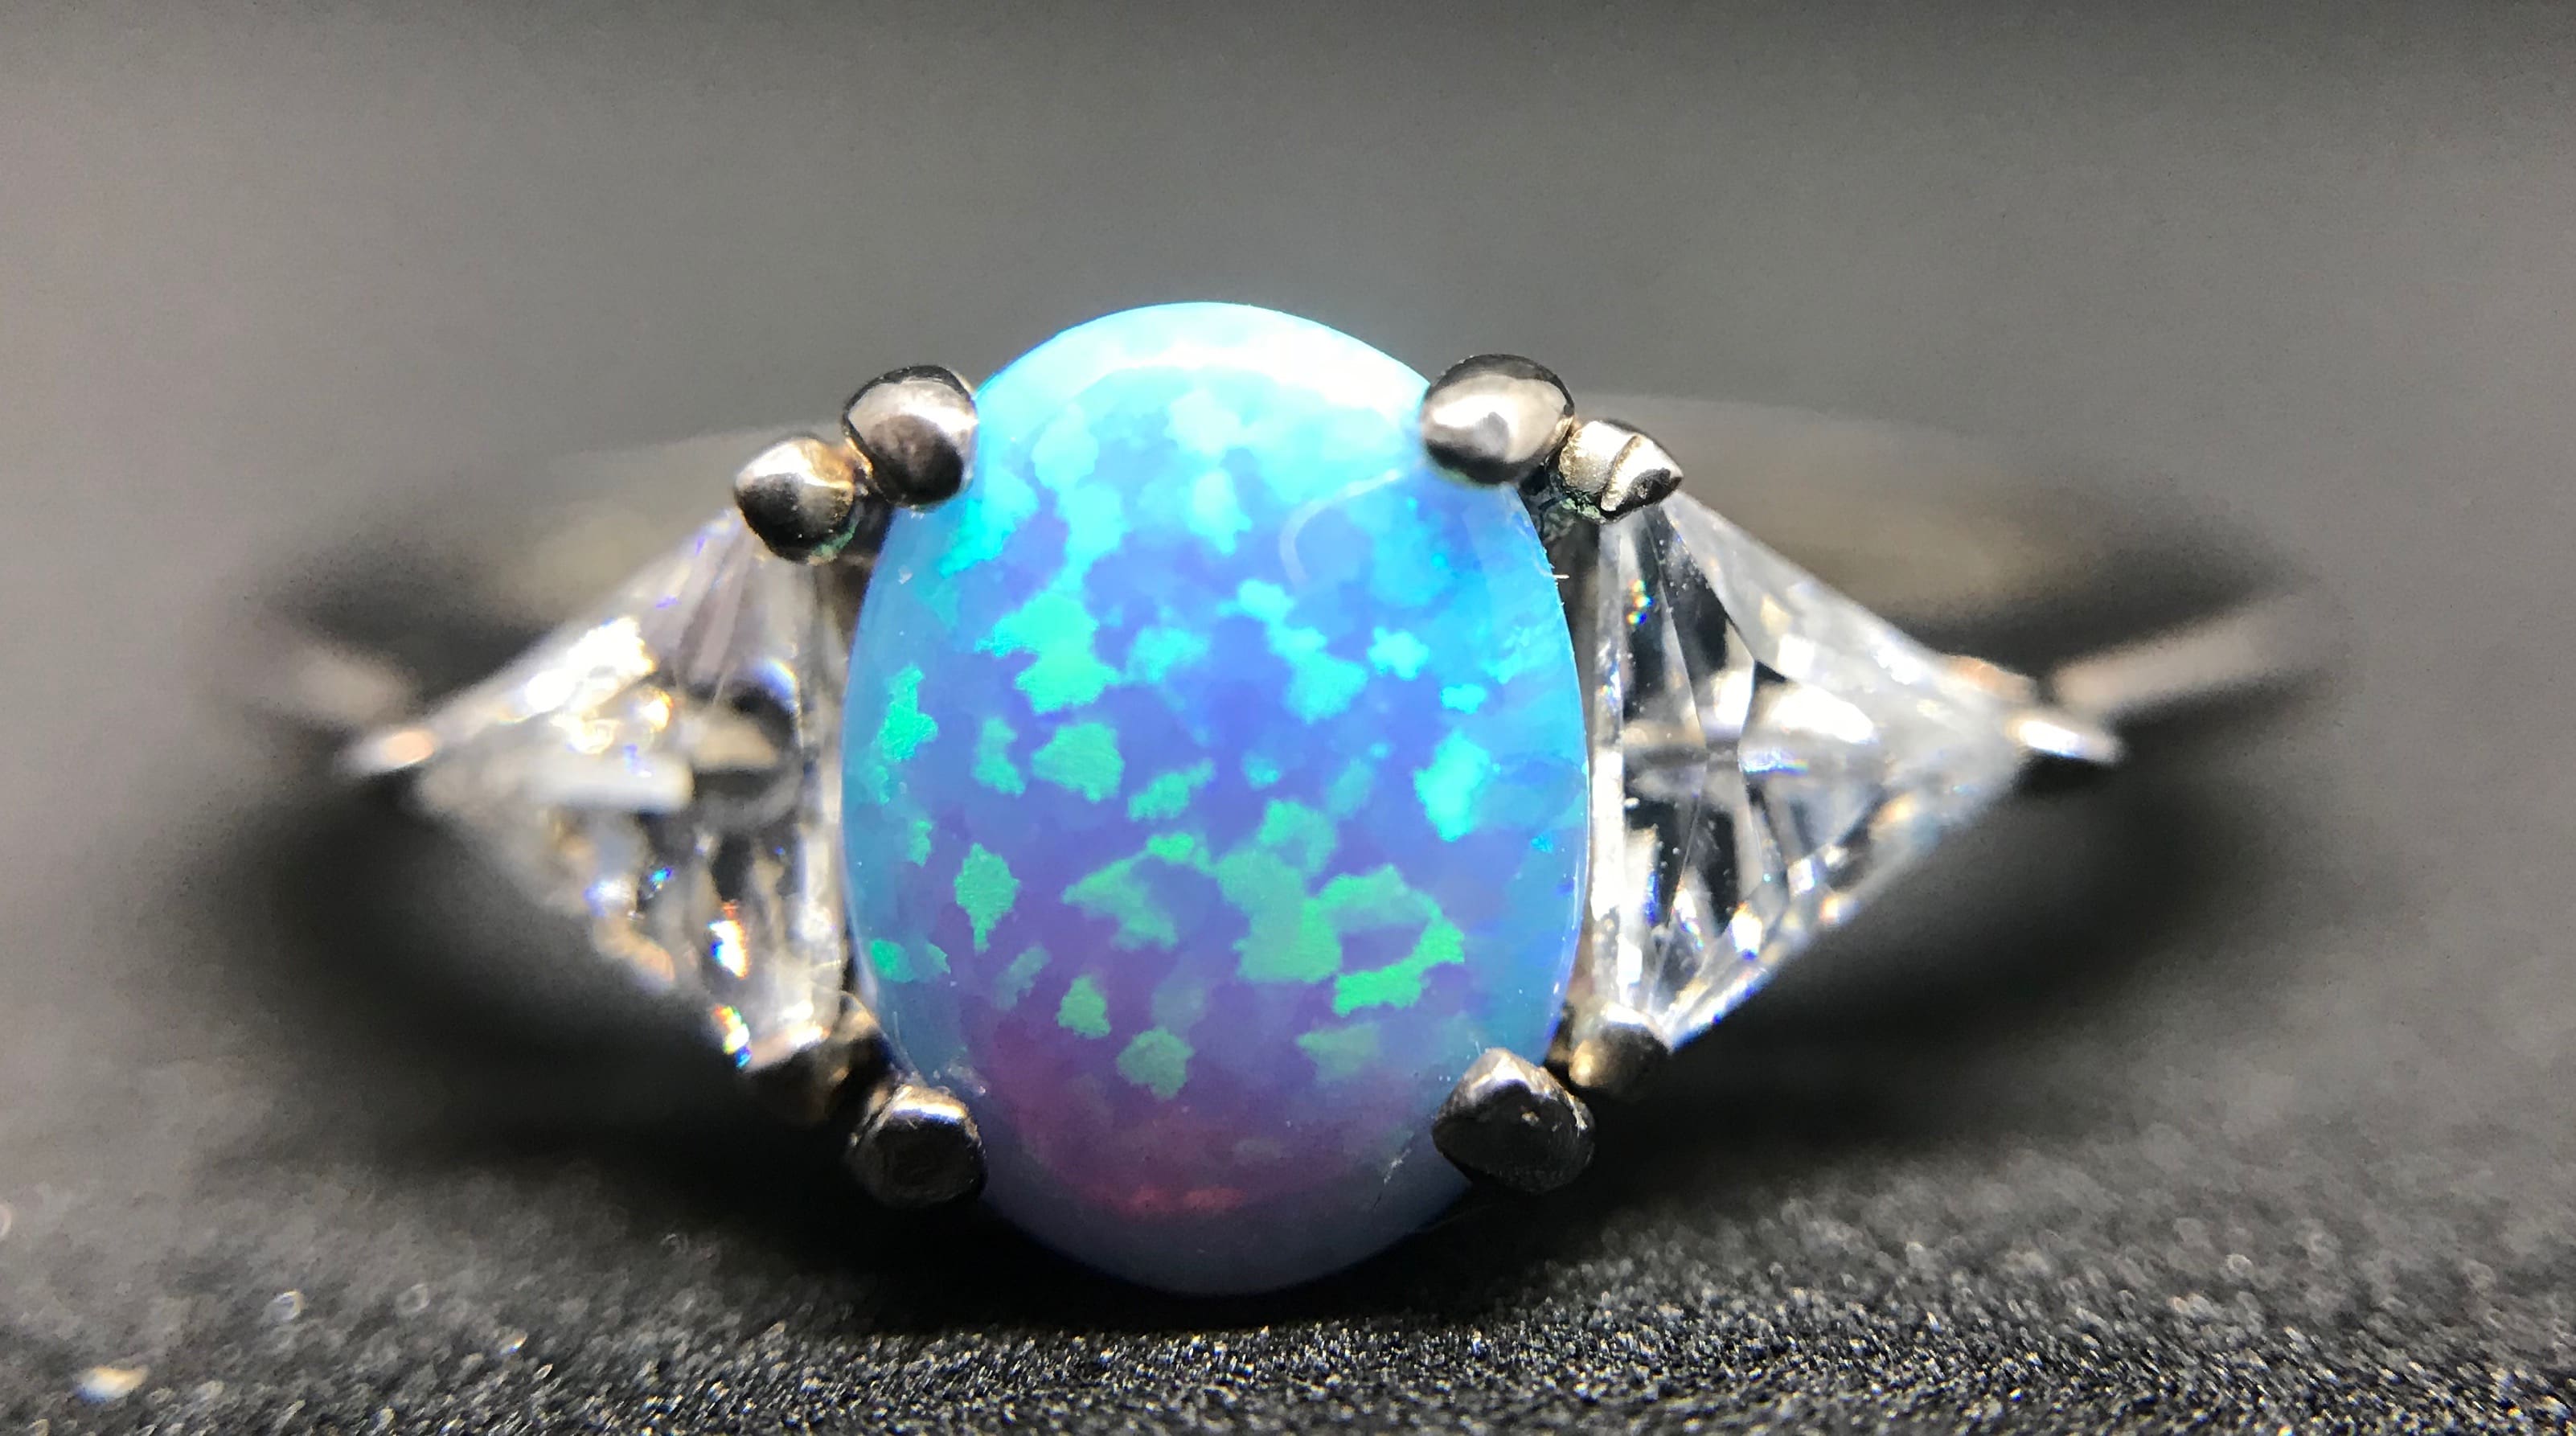 Opal Ring - Comment se forme une opale